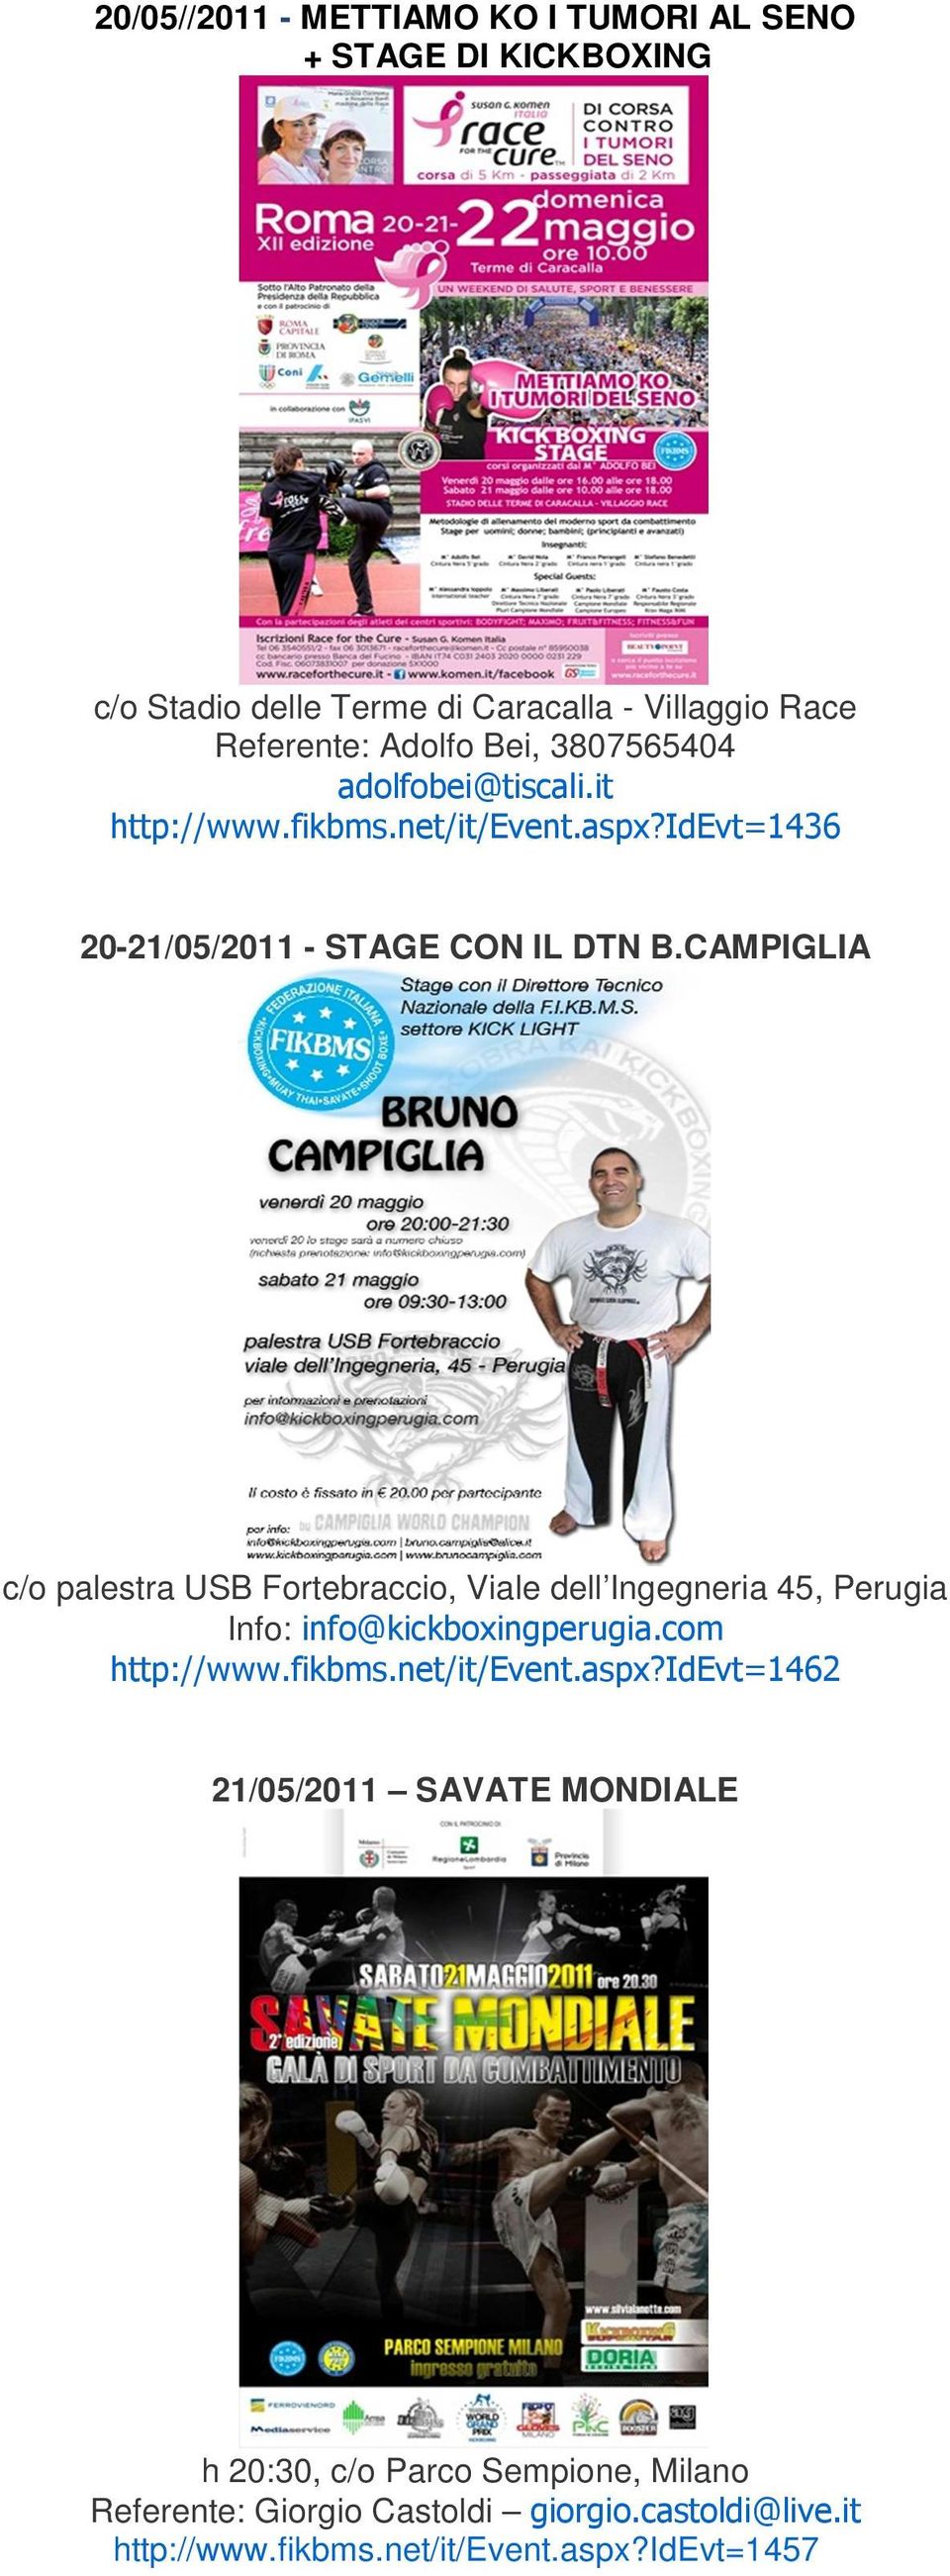 CAMPIGLIA c/o palestra USB Fortebraccio, Viale dell Ingegneria 45, Perugia Info: info@kickboxingperugia.com http://www.fikbms.net/it/event.